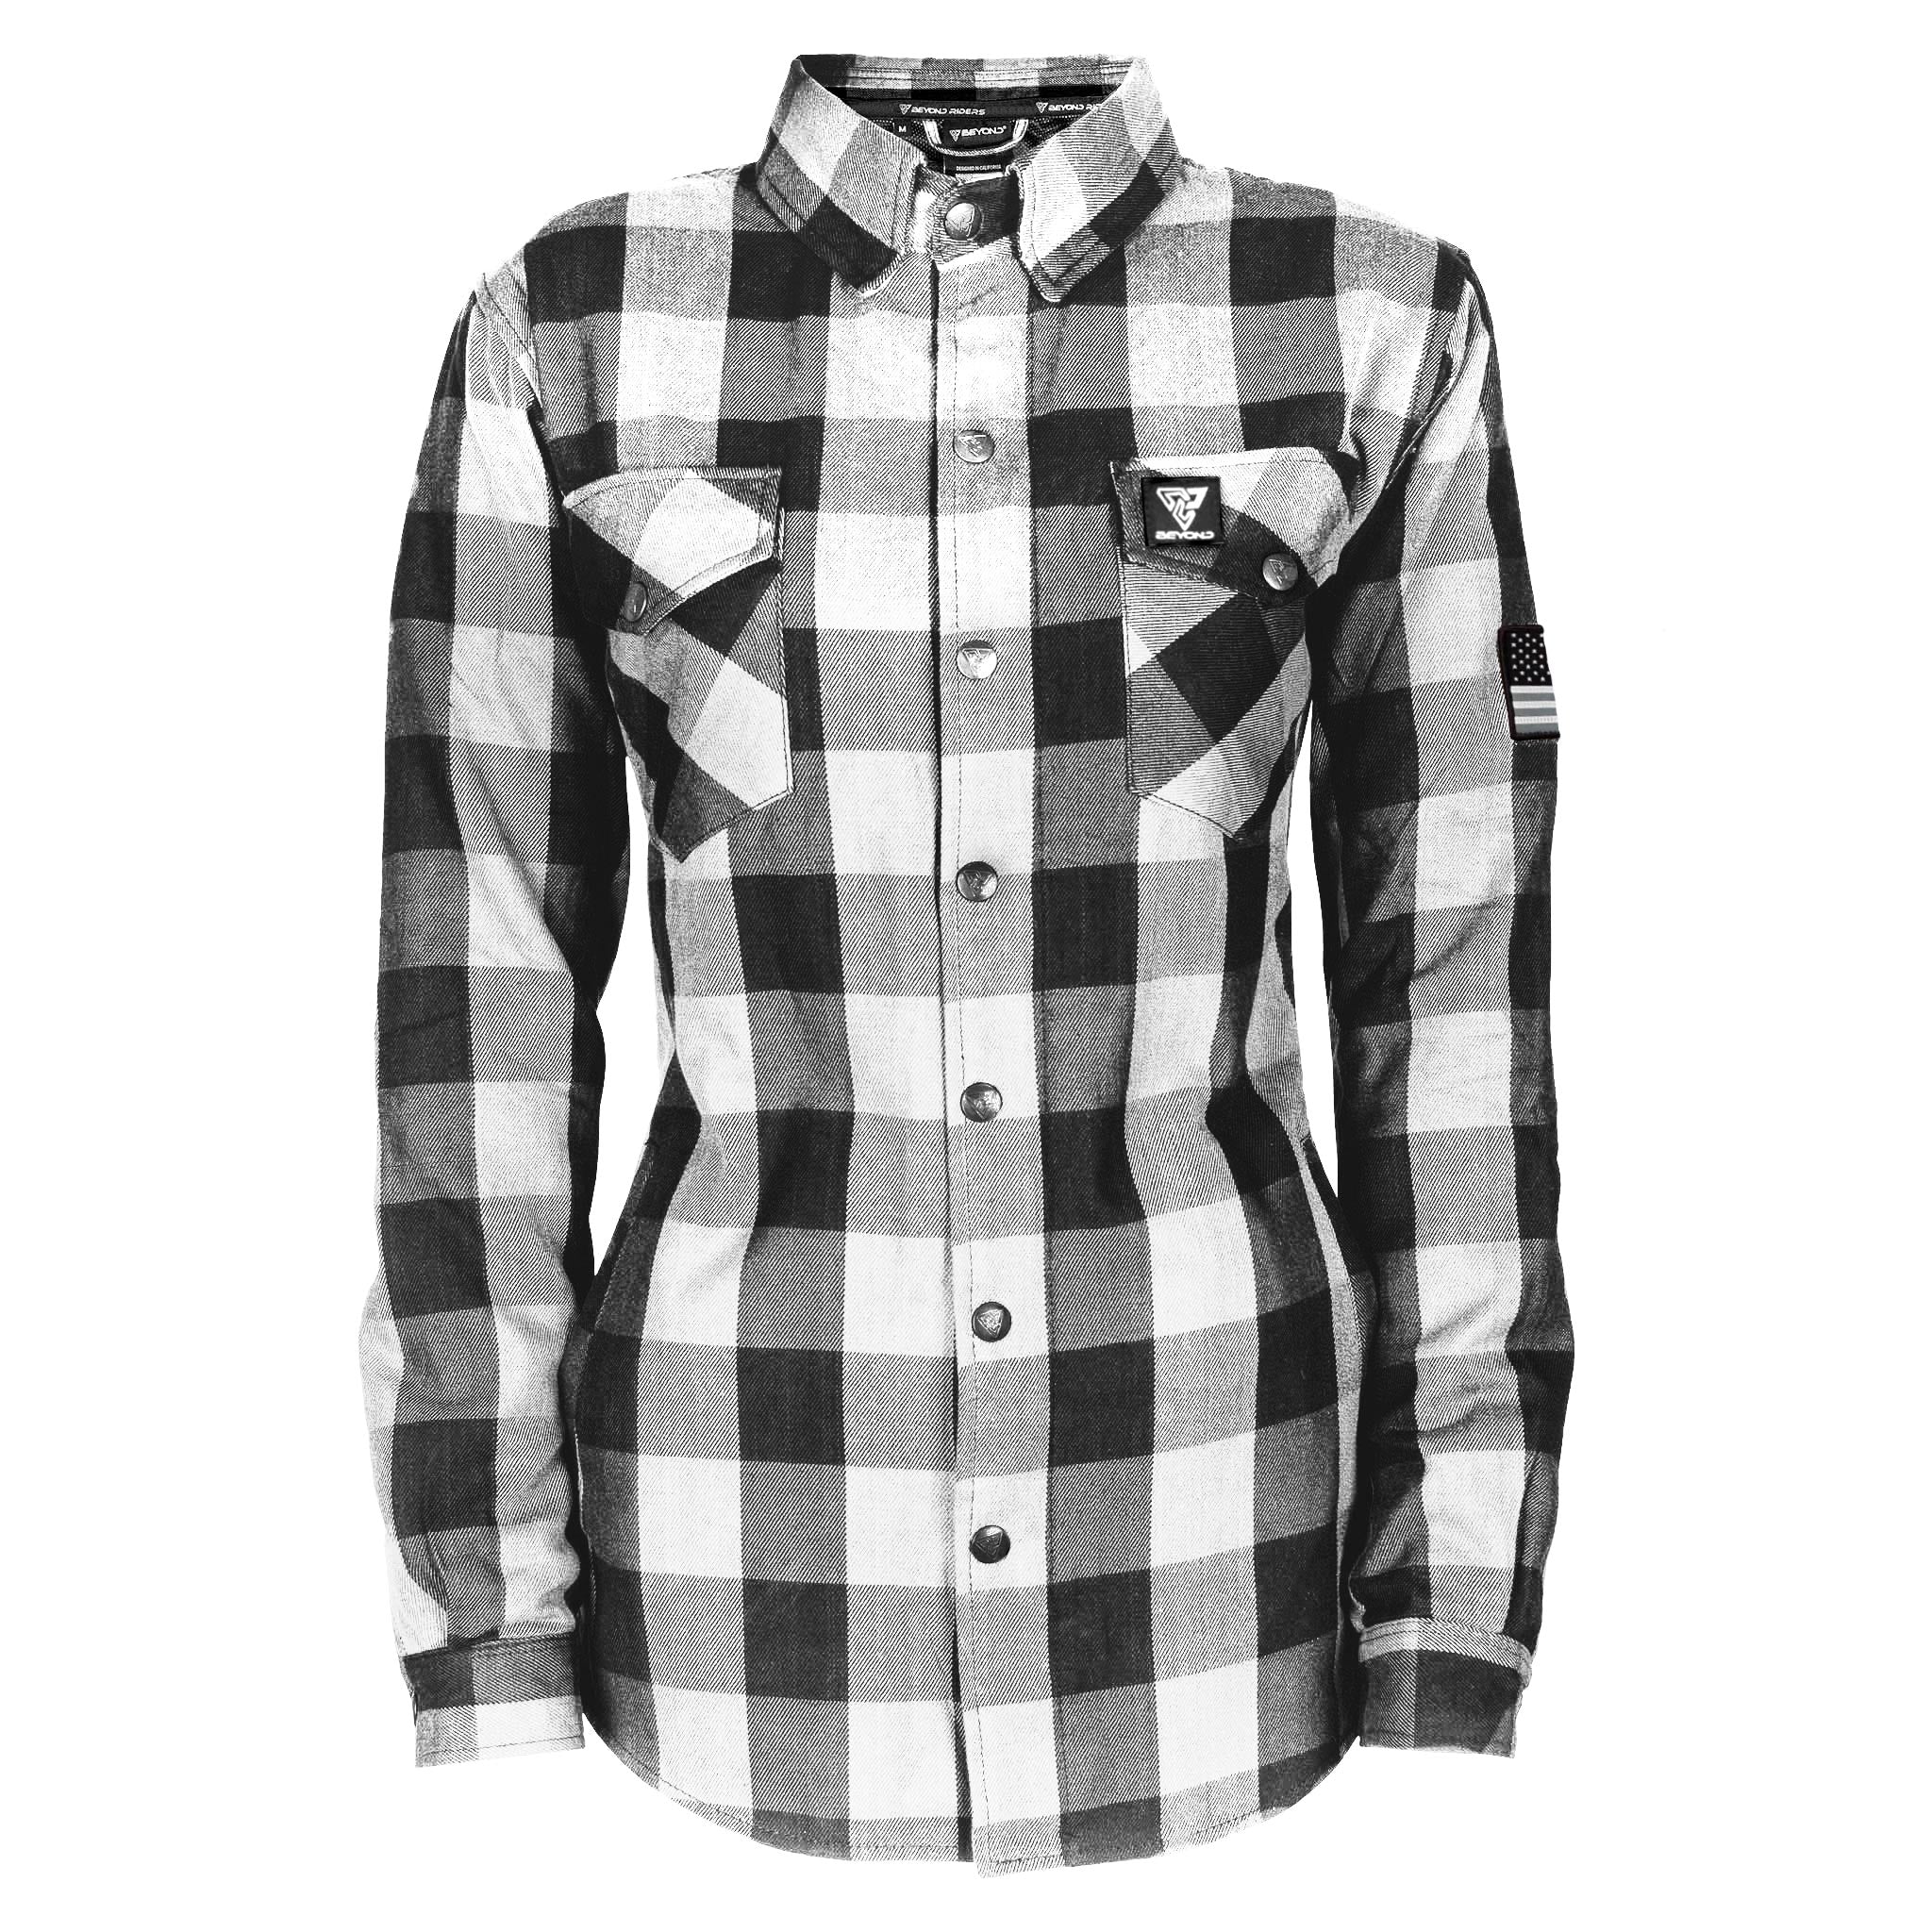 Flannel Shirt for Women - White Checkered